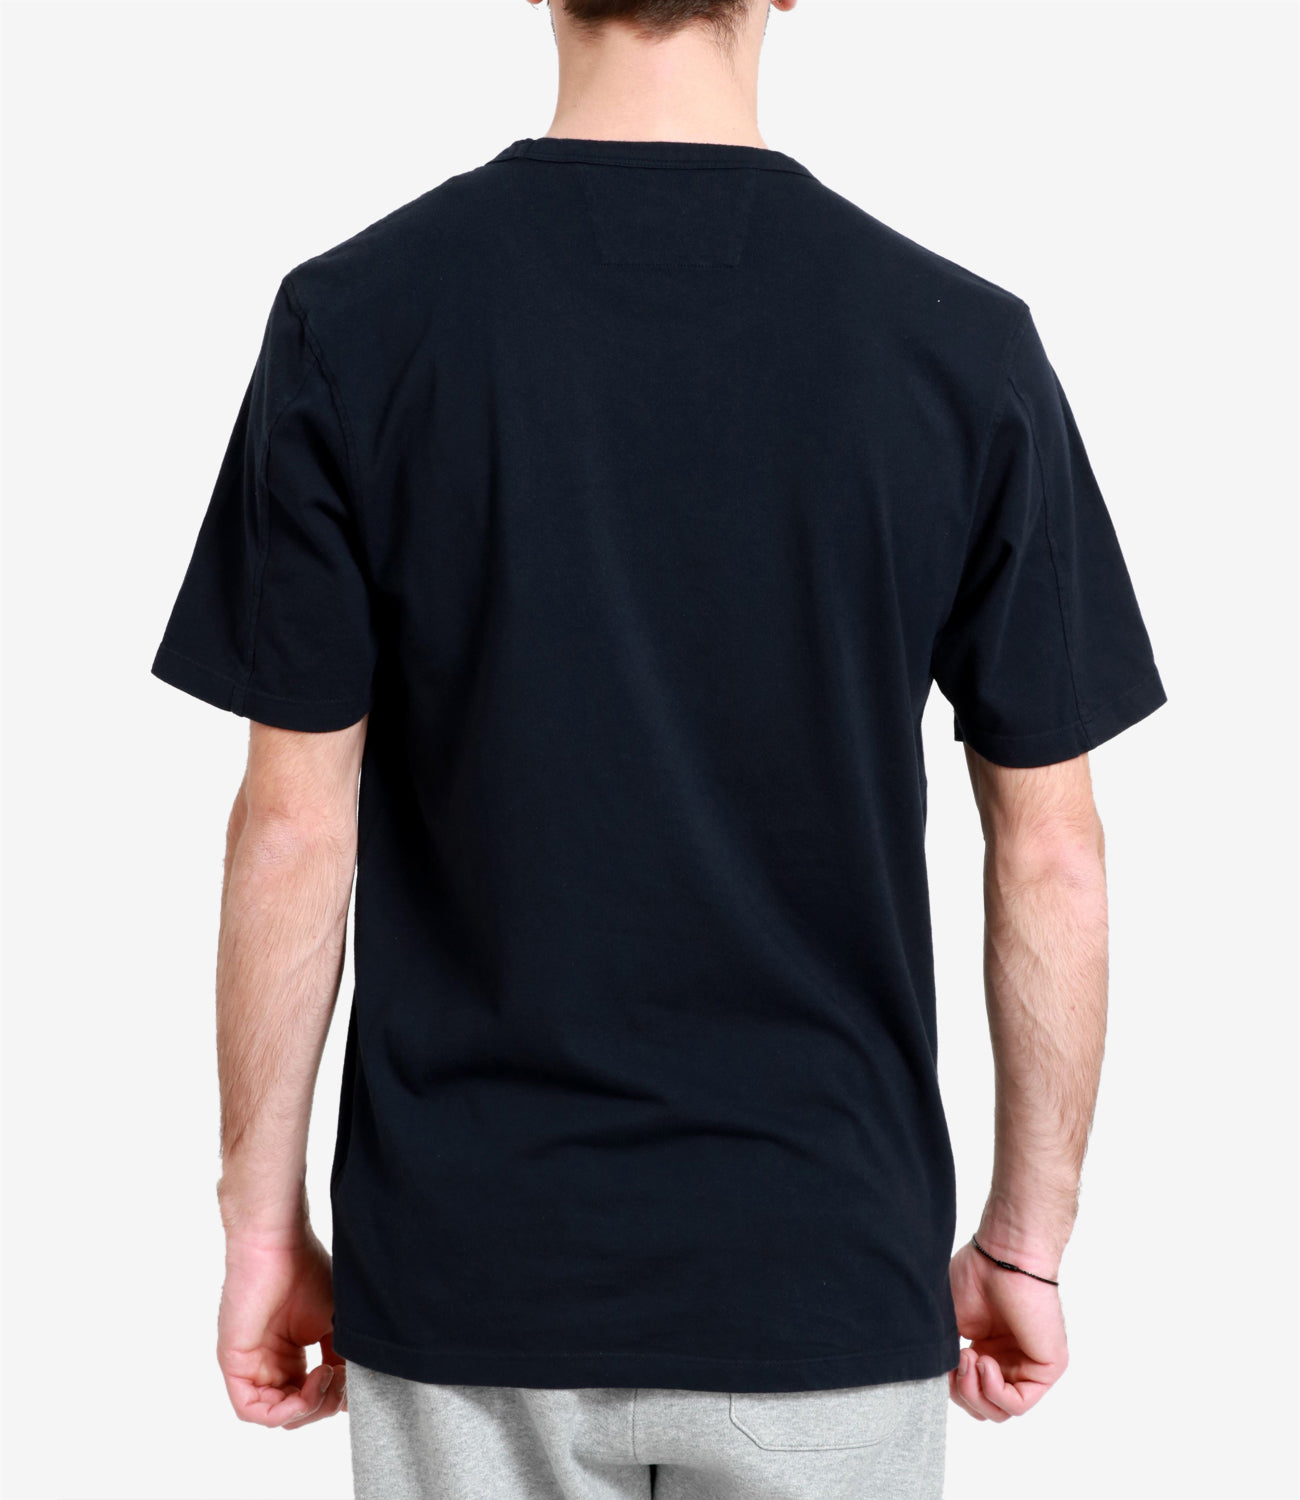 C.P. Company | T-Shirt Eclipse